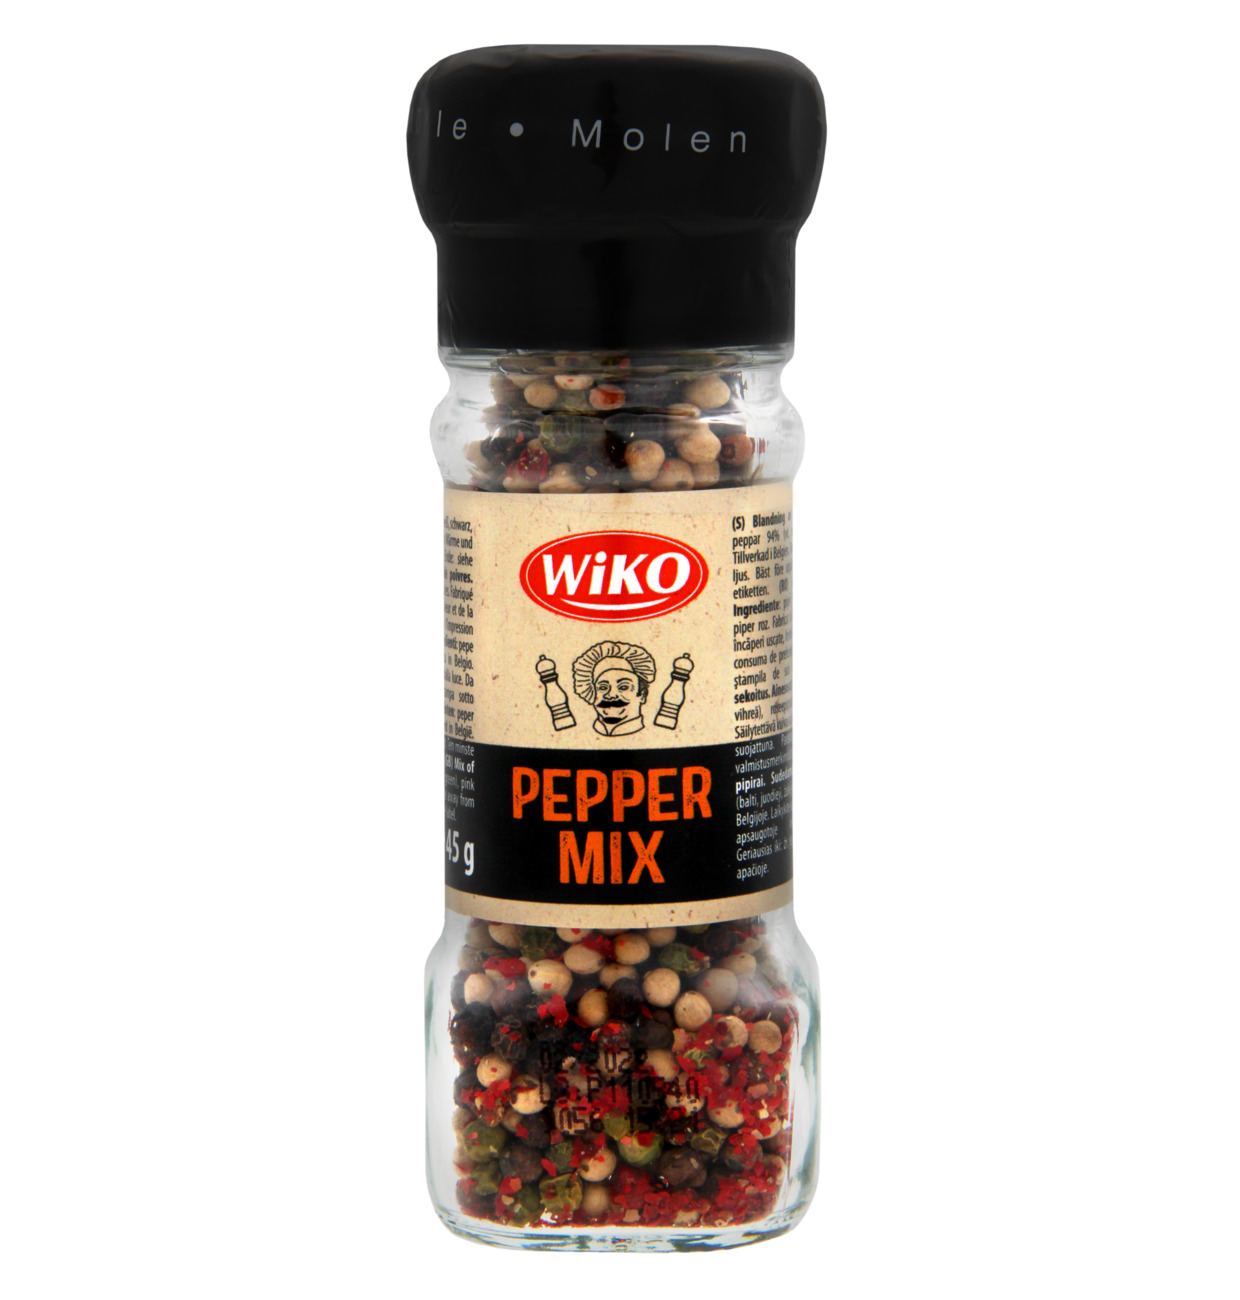 Niko Pepper Mix 45g